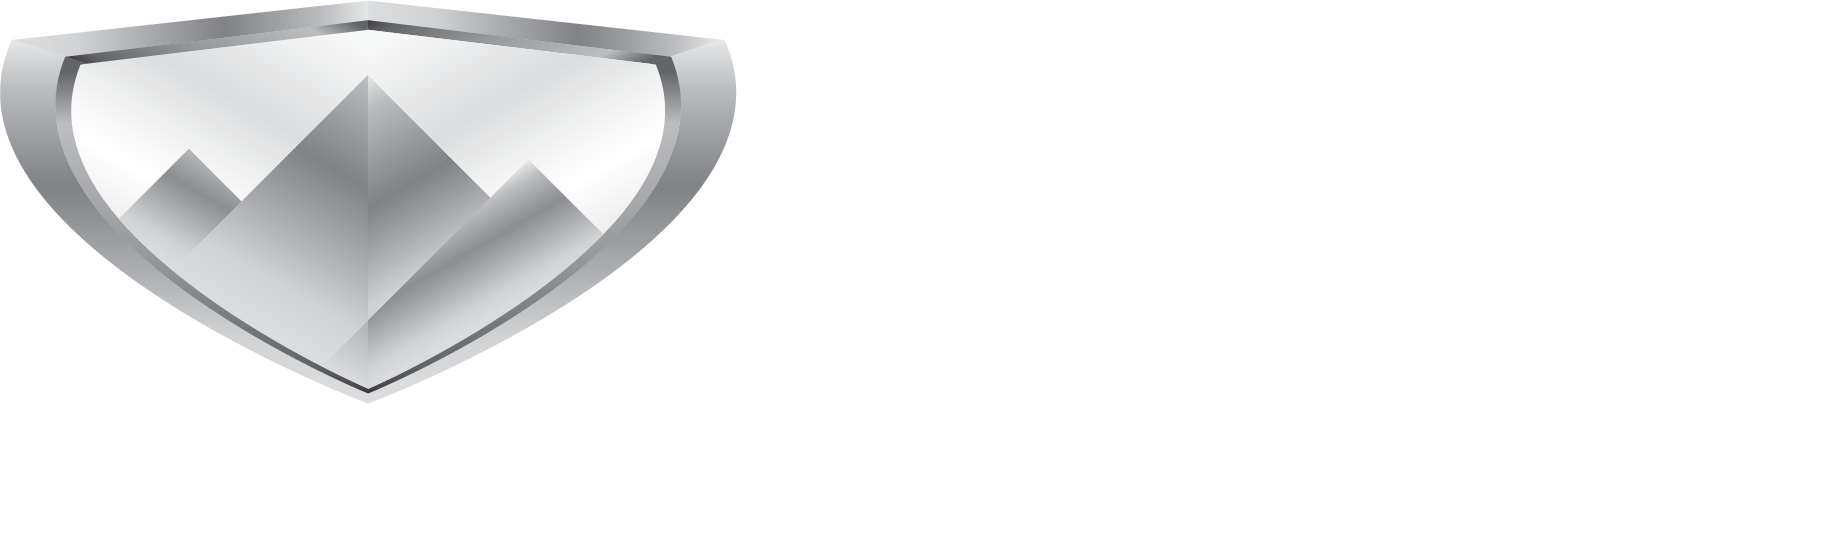 2102 highland ridge drive